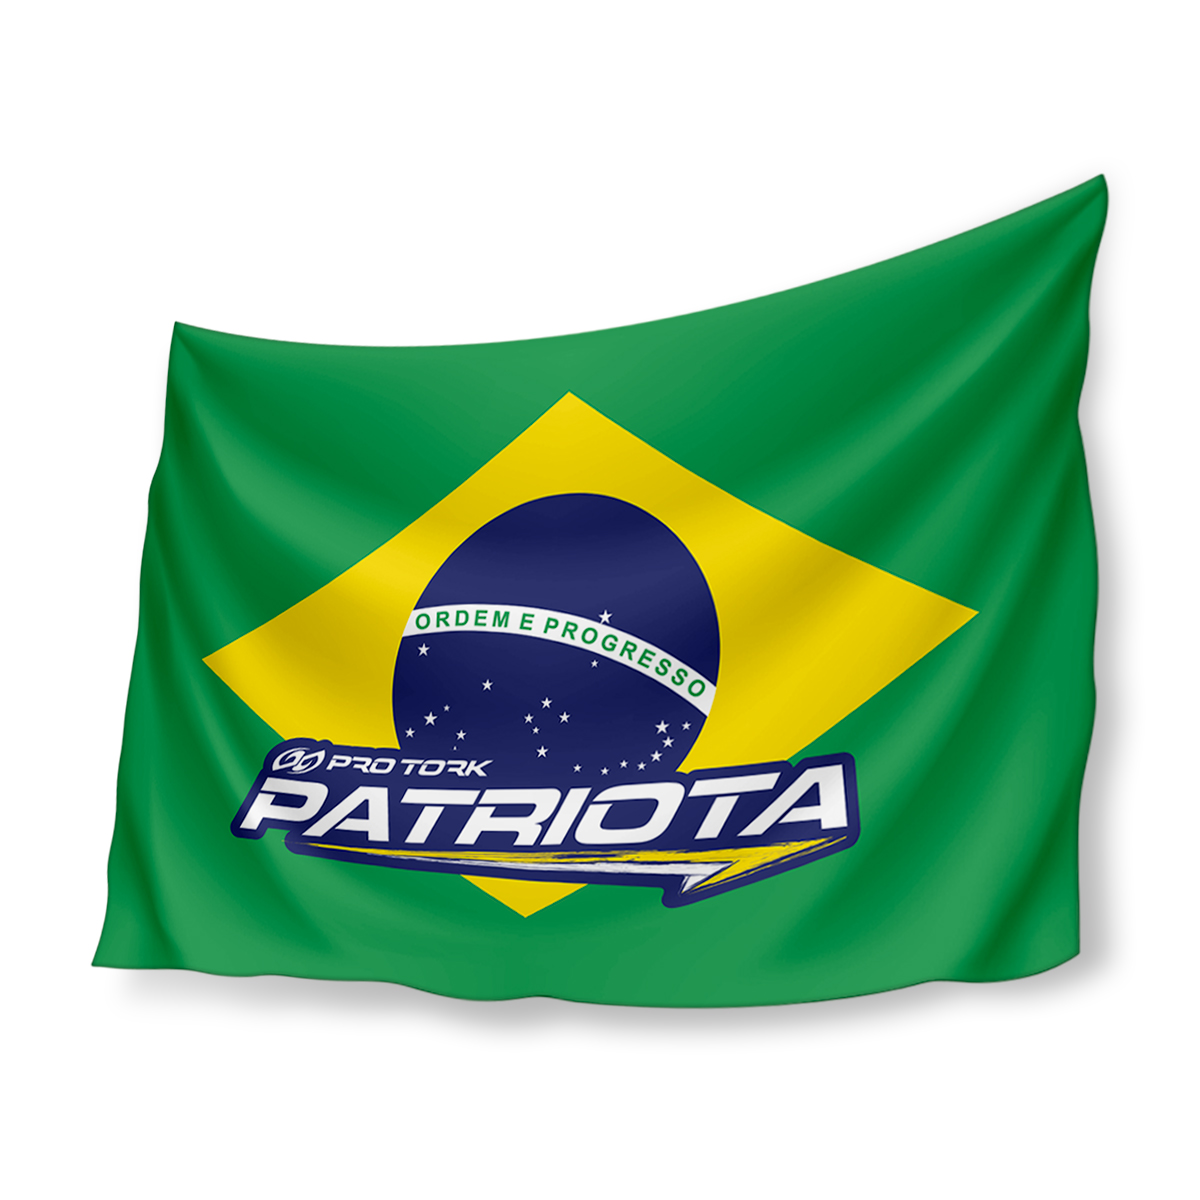 Bandeira Brasil 80 X 56 Patriota Pro Tork